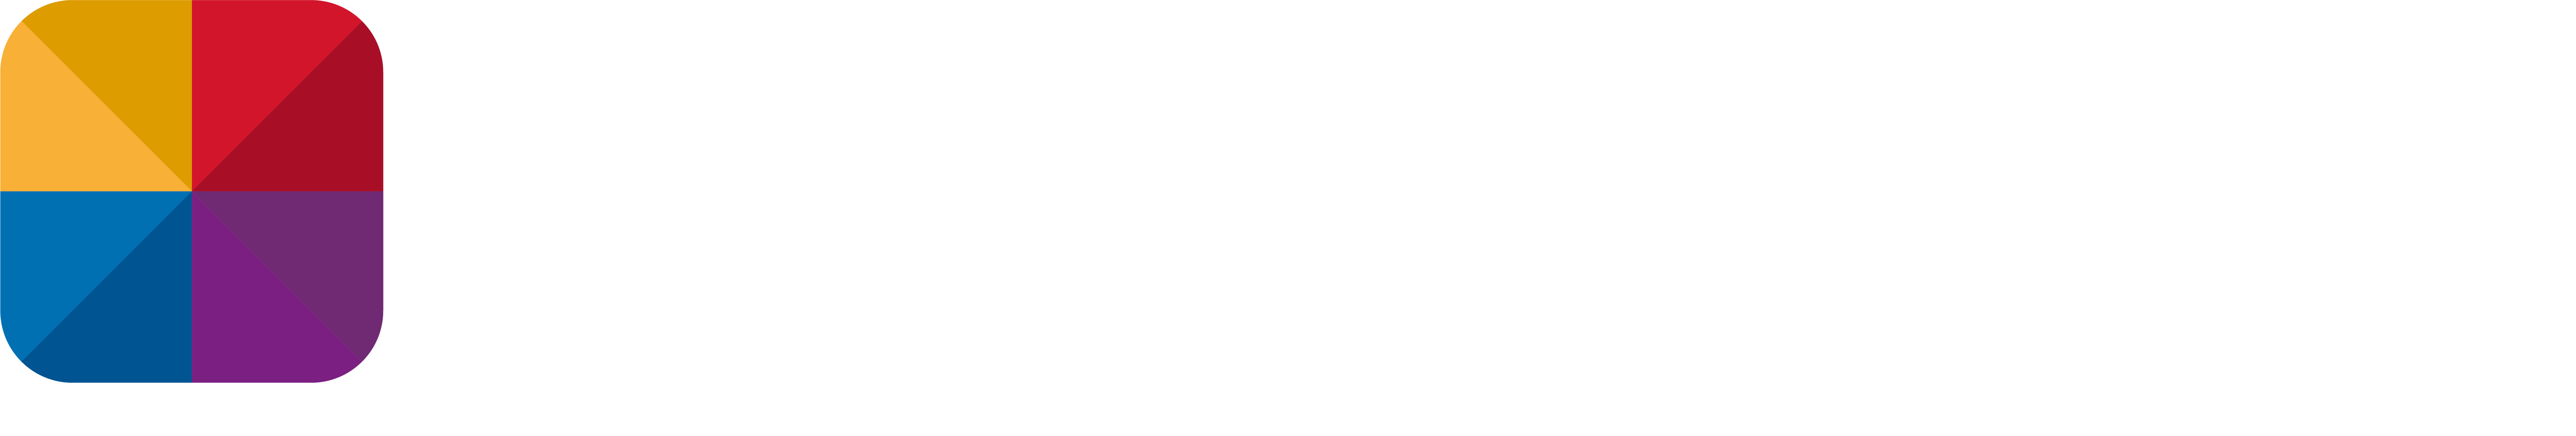 Logo_Navigate-HR-Lite_Inverse@4x.png